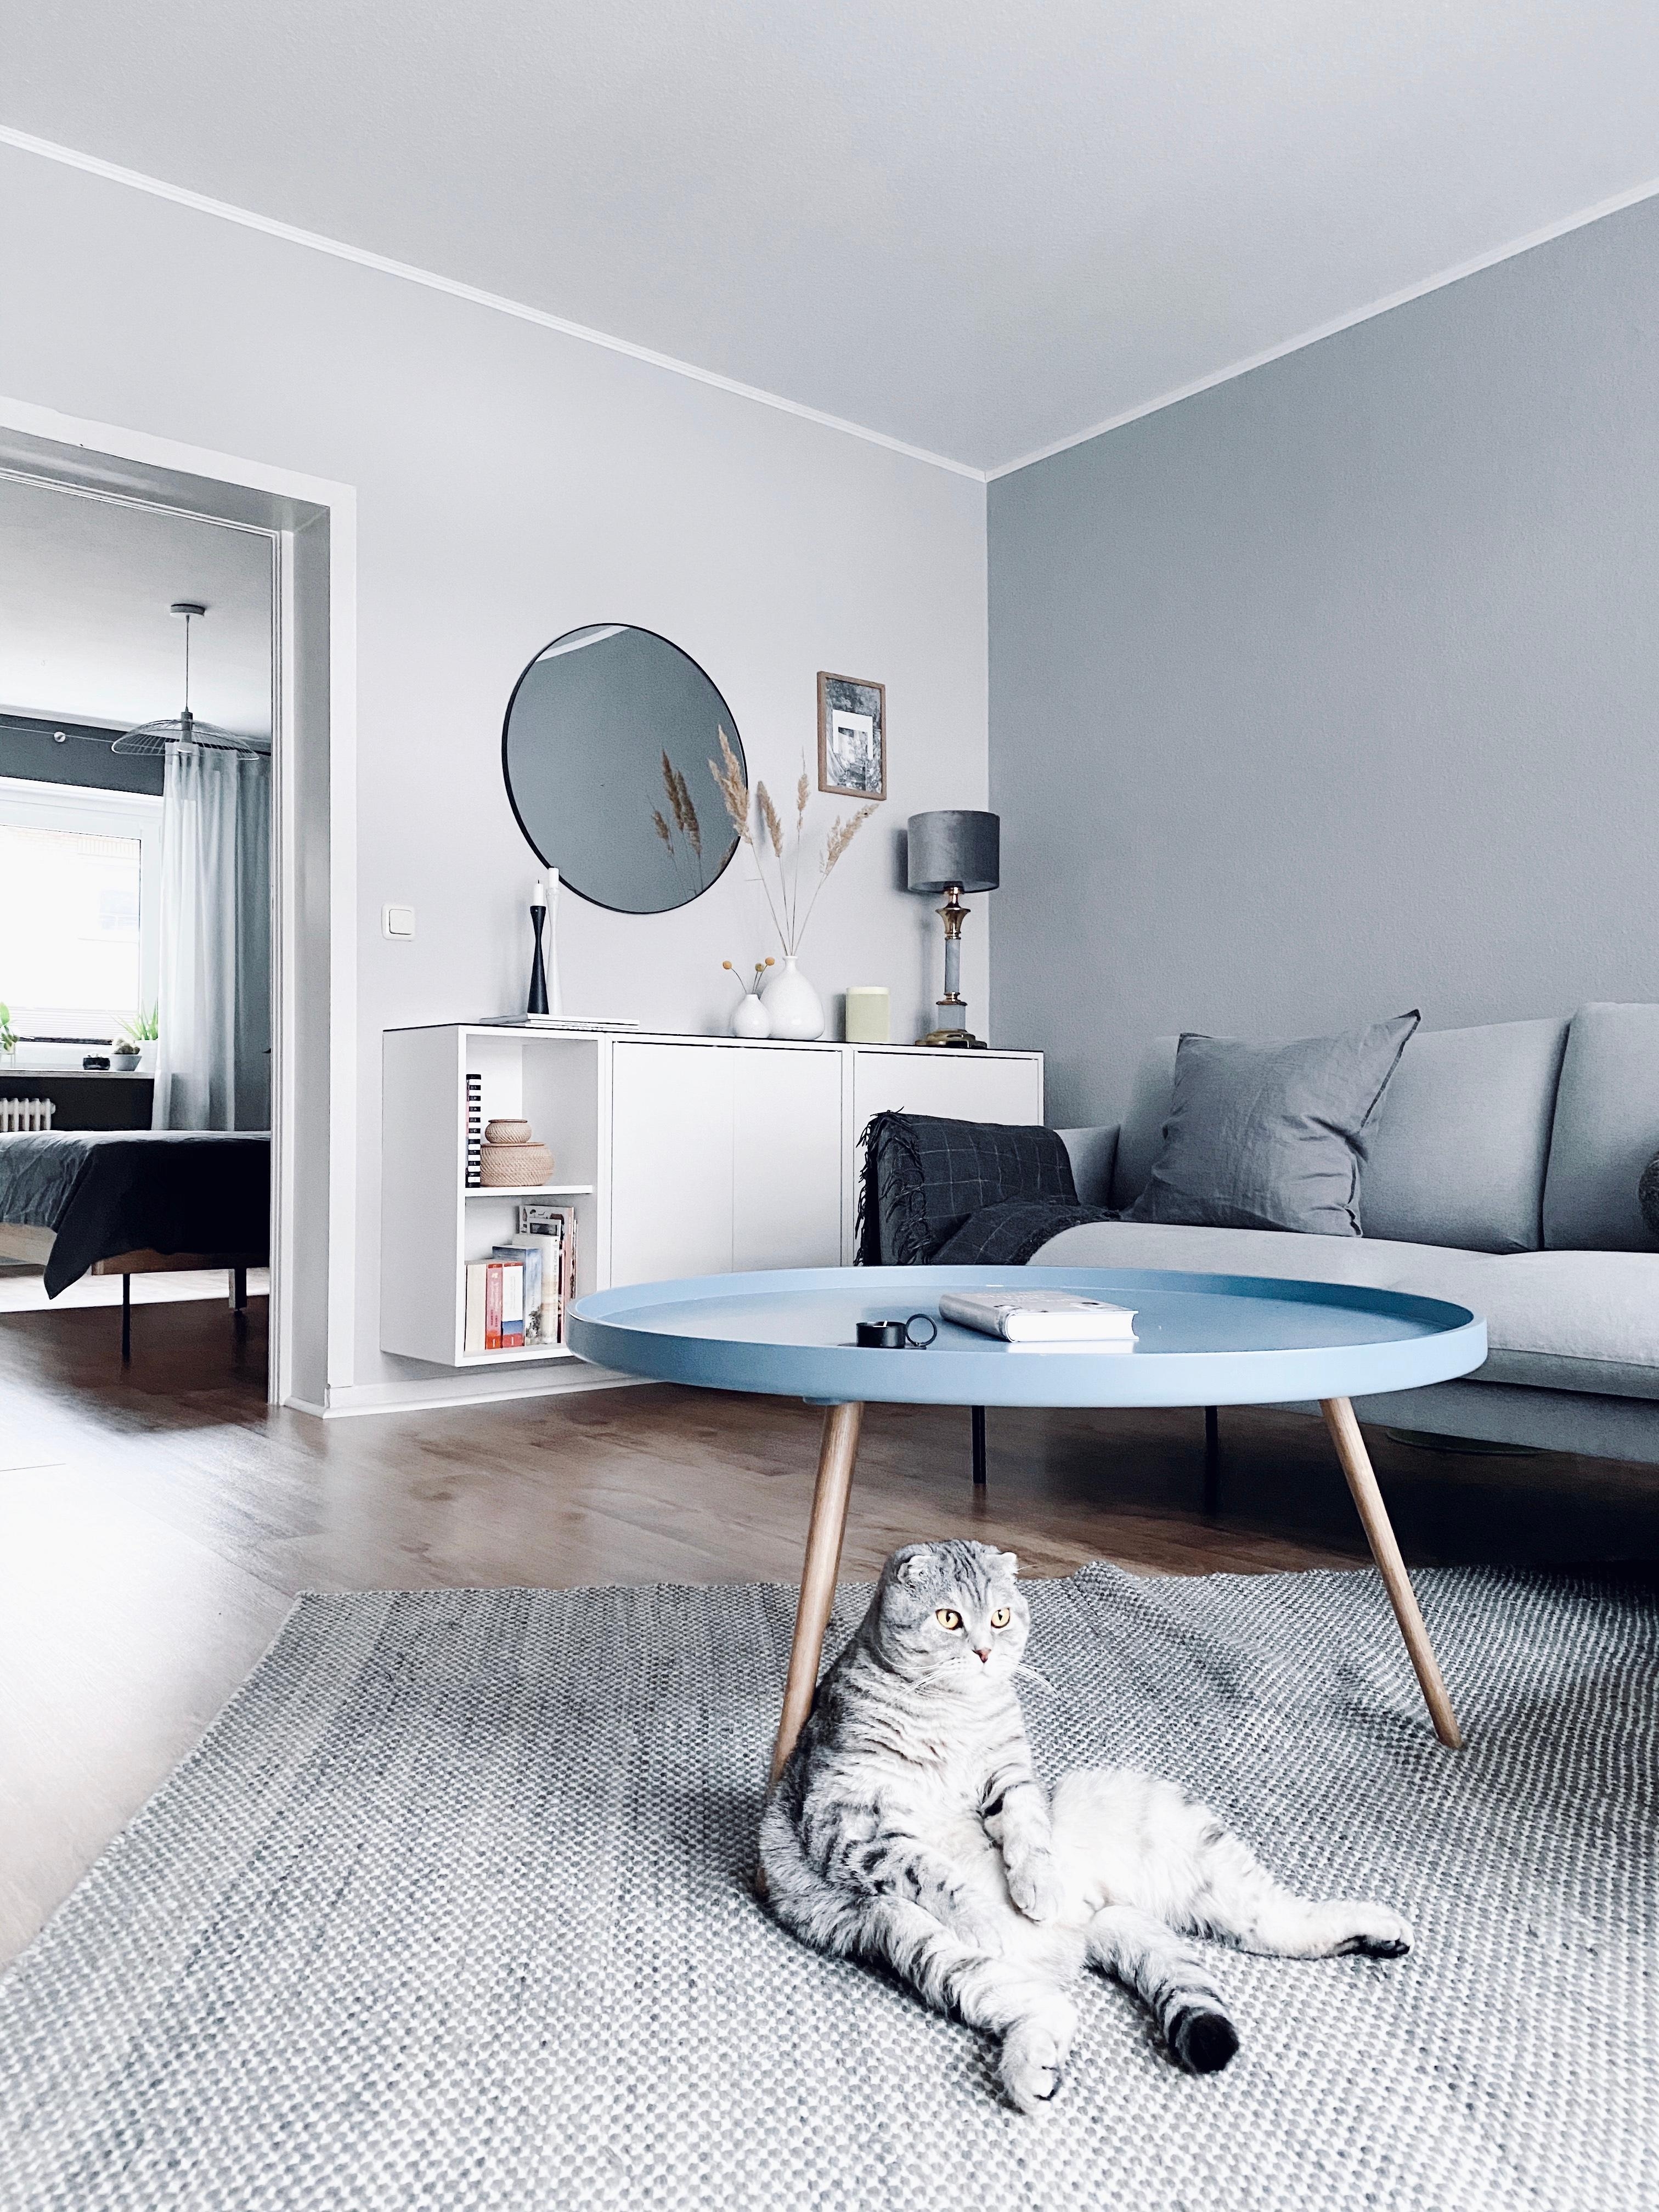 Happy Saturday! 🤍
#livingroom #mynordicroom #interior #minimalism #catlover 